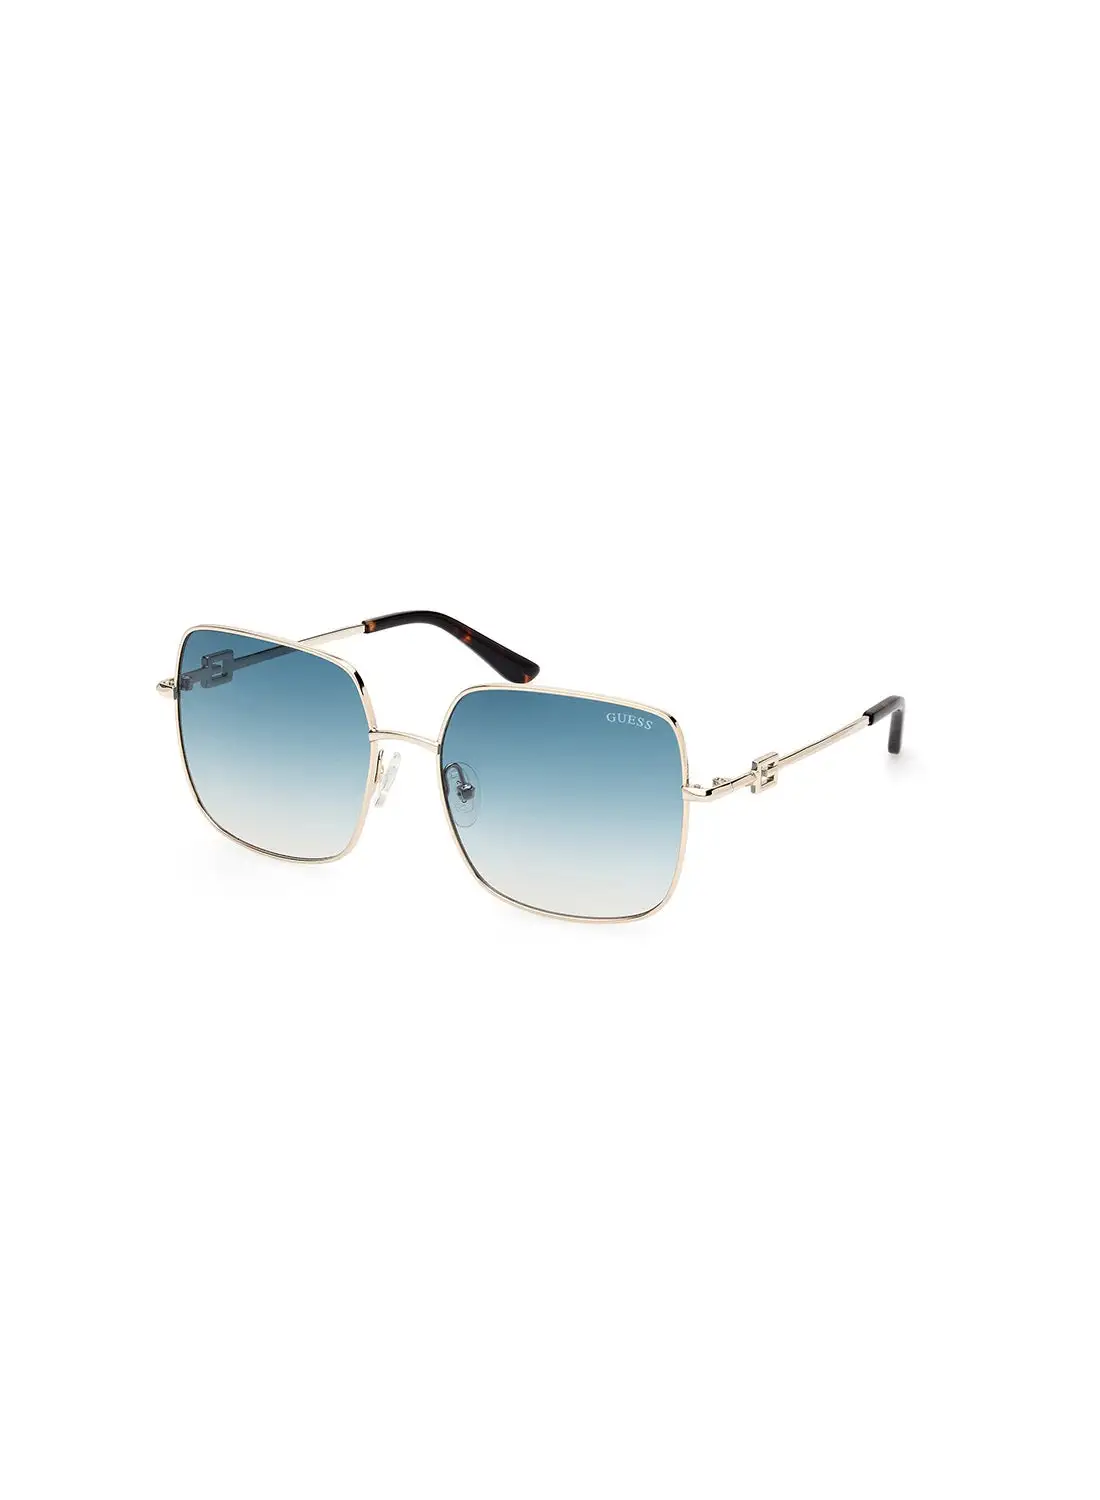 GUESS Women's UV Protection Square Sunglasses - GU7906-H32P58 - Lens Size: 58 Mm